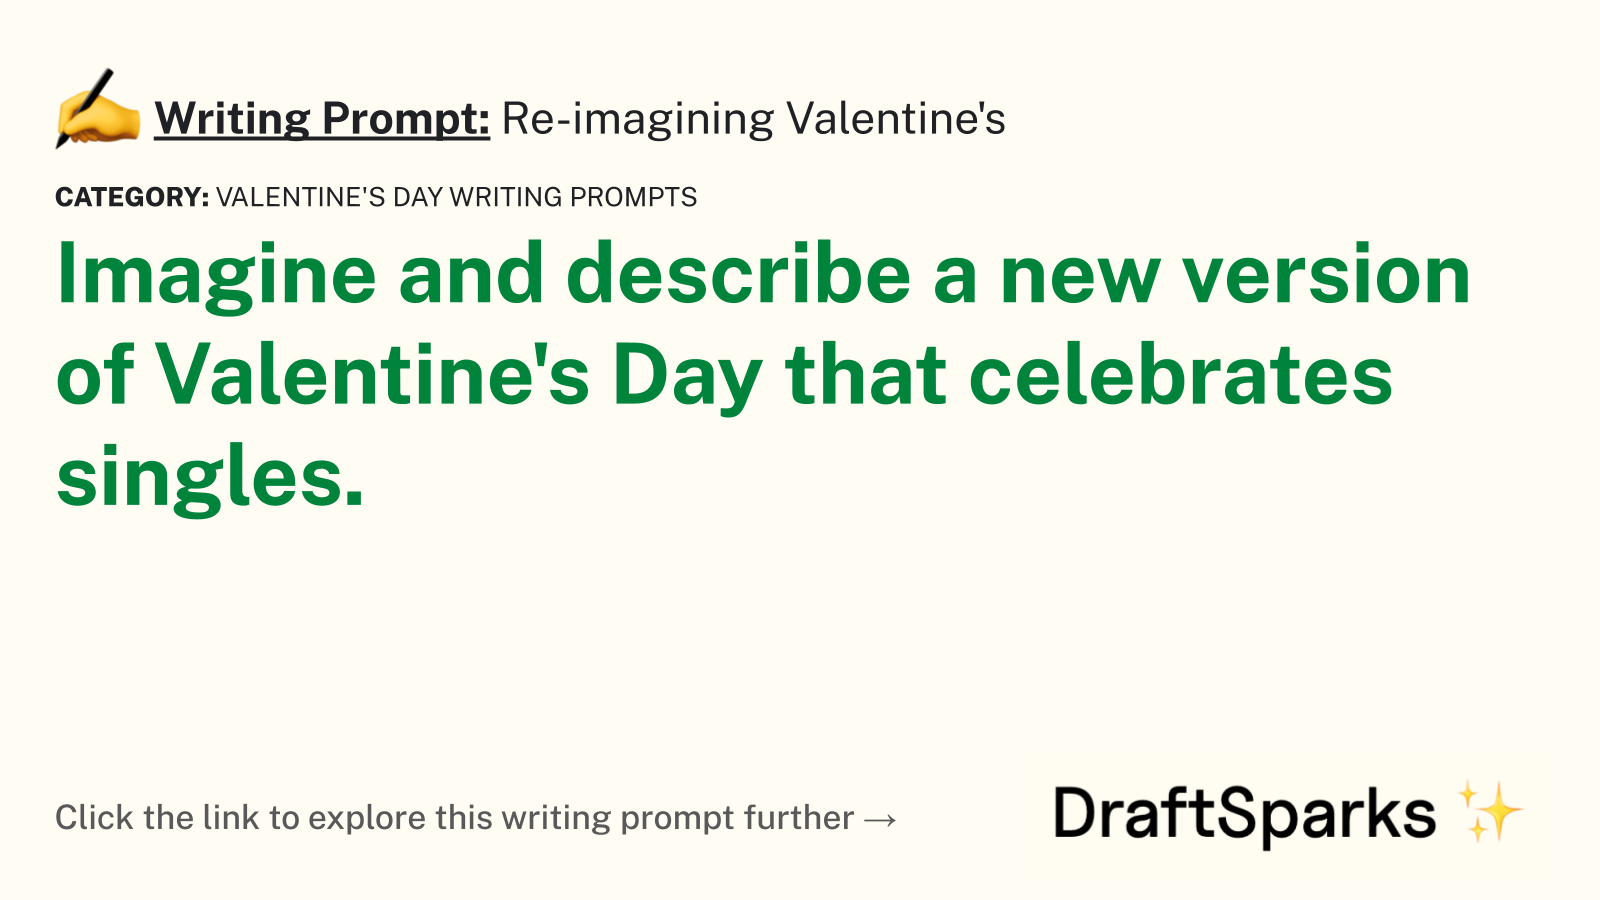 Re-imagining Valentine’s